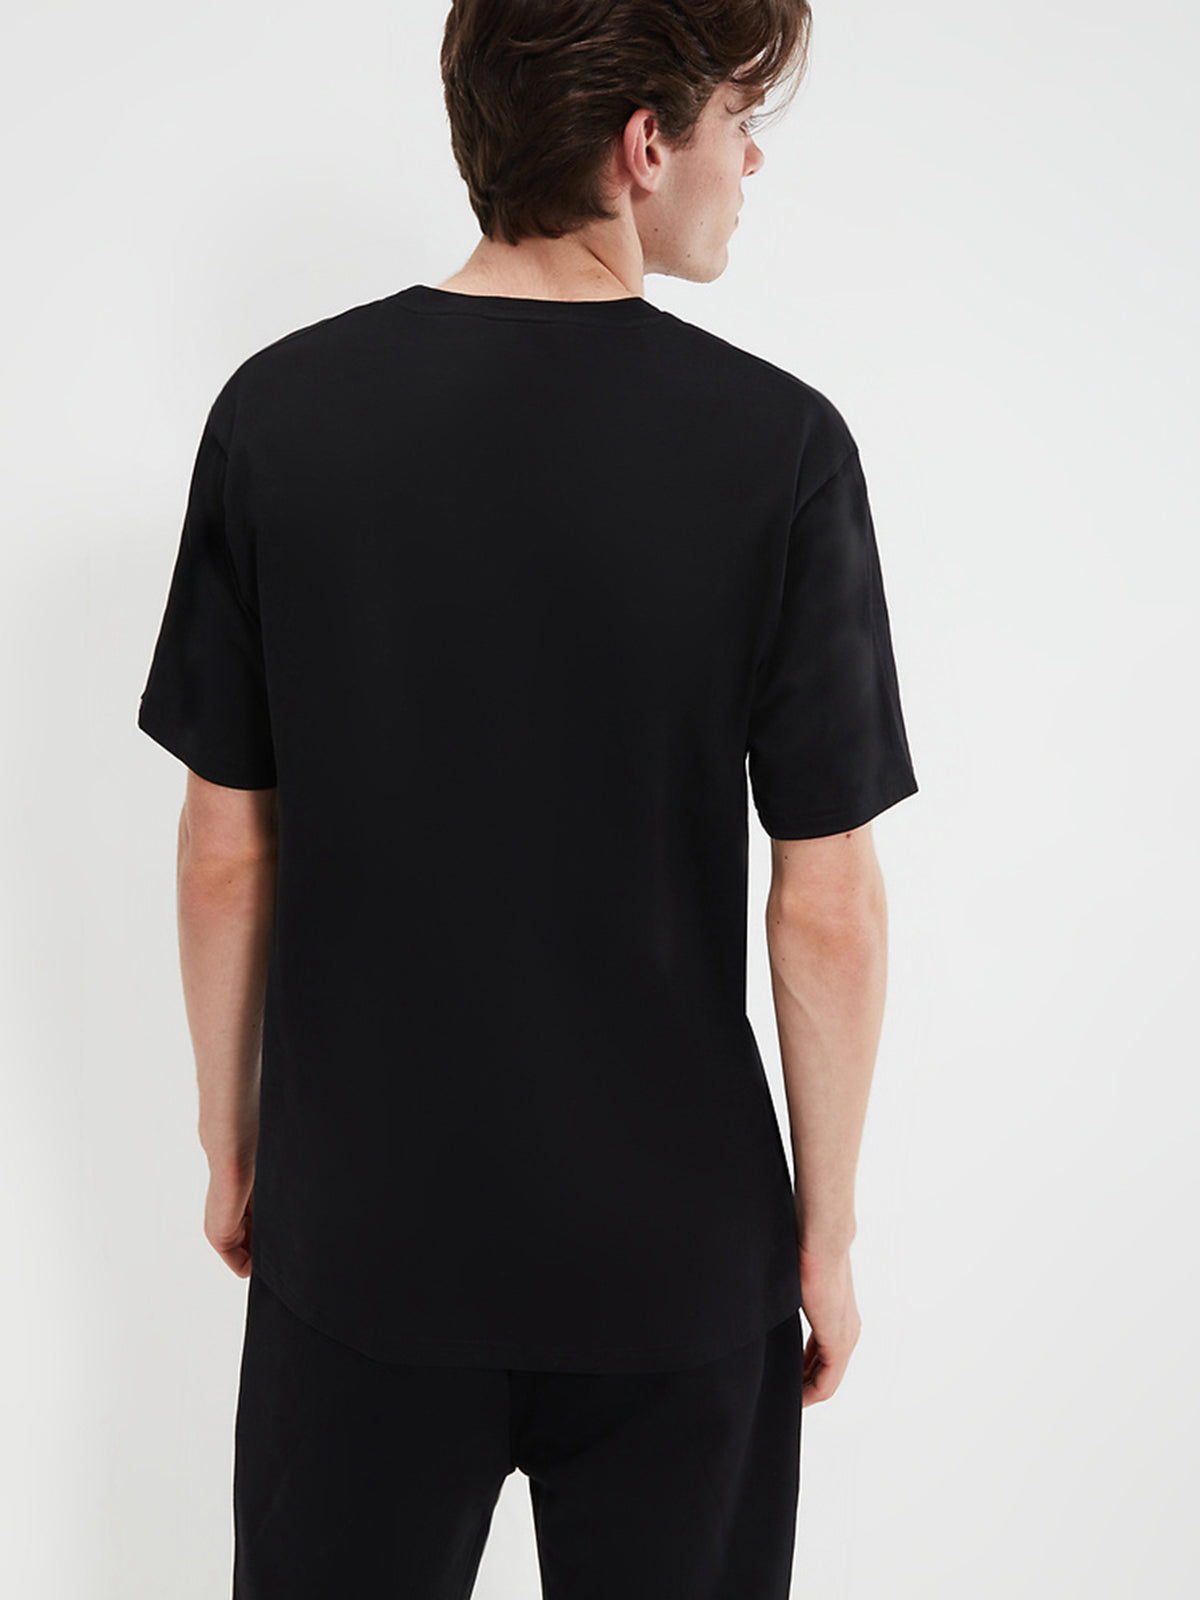 Voodoo Short Sleeve T-Shirt in Black